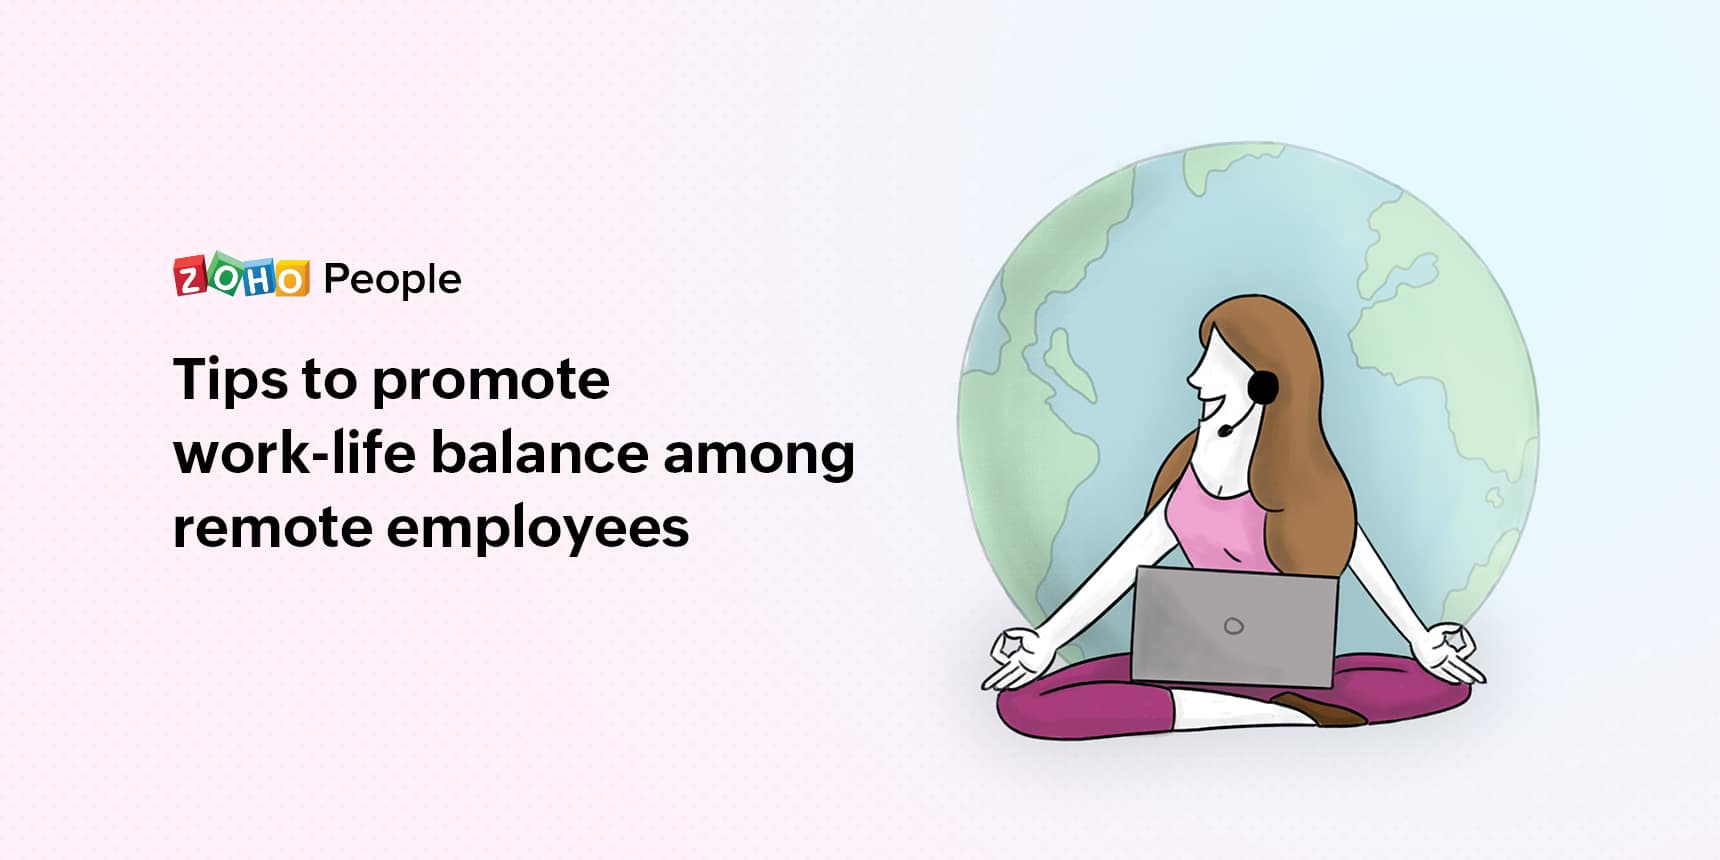 Promoting work-life balance among remote employees